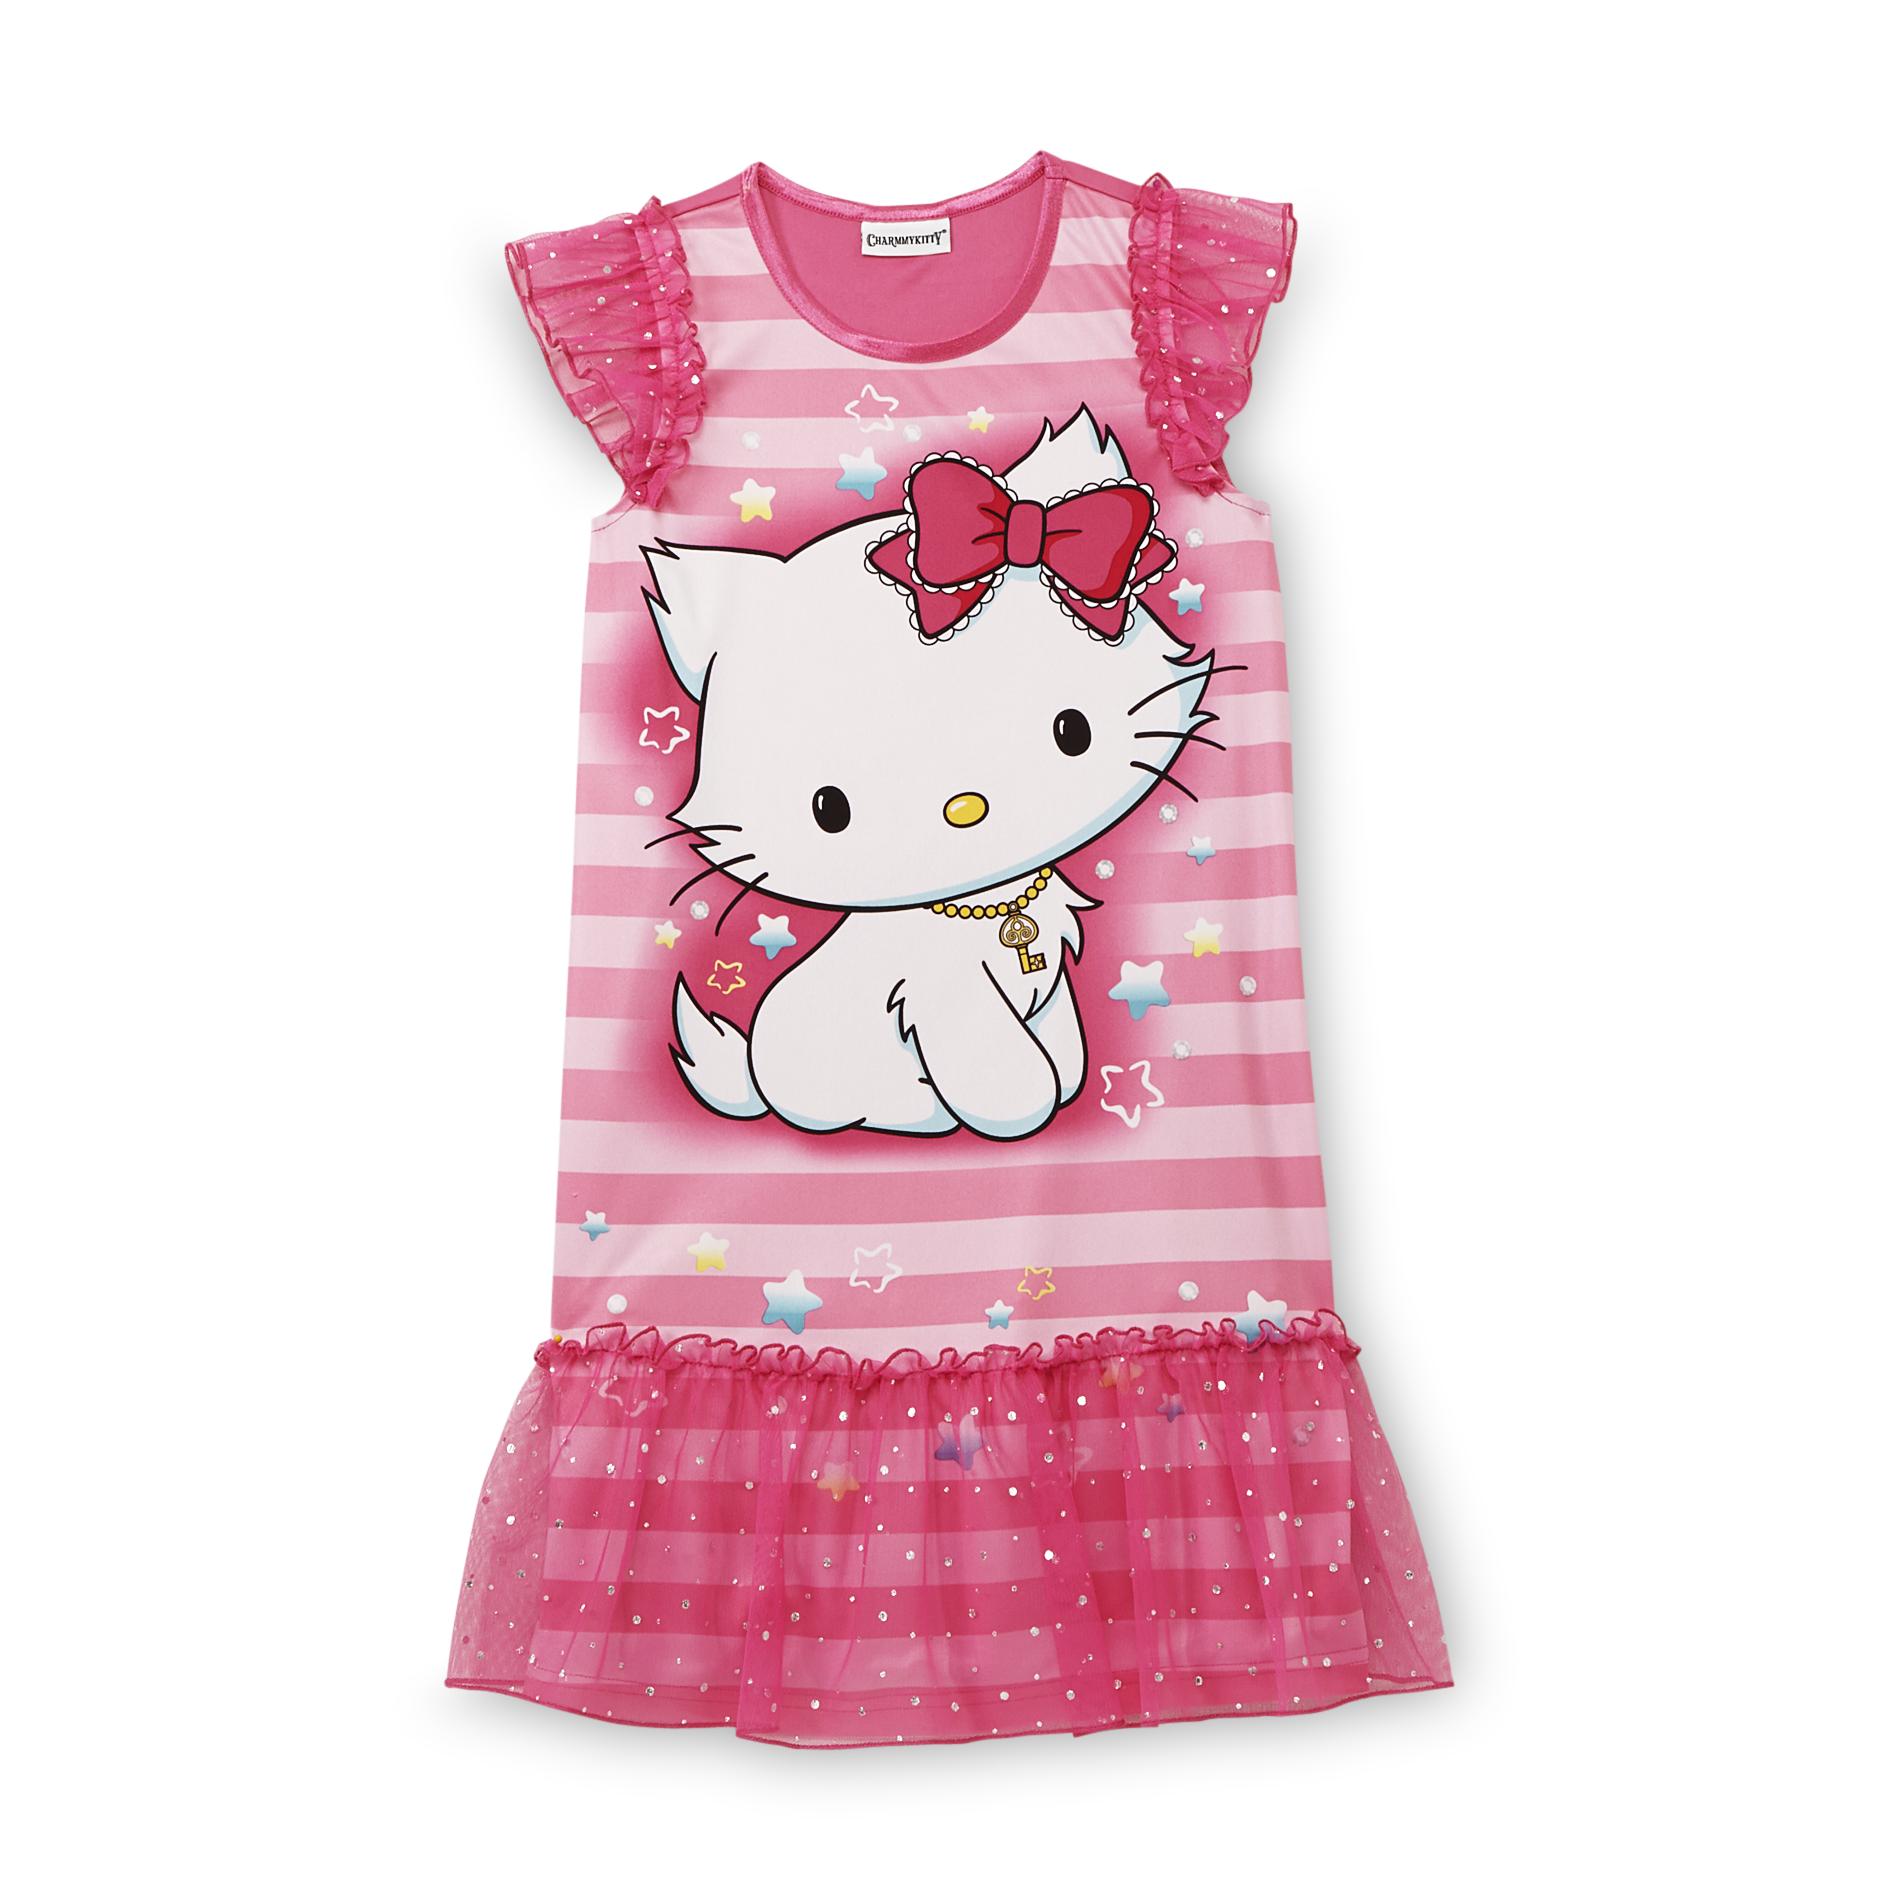 Sanrio Charmmy Kitty Girl's Nightgown